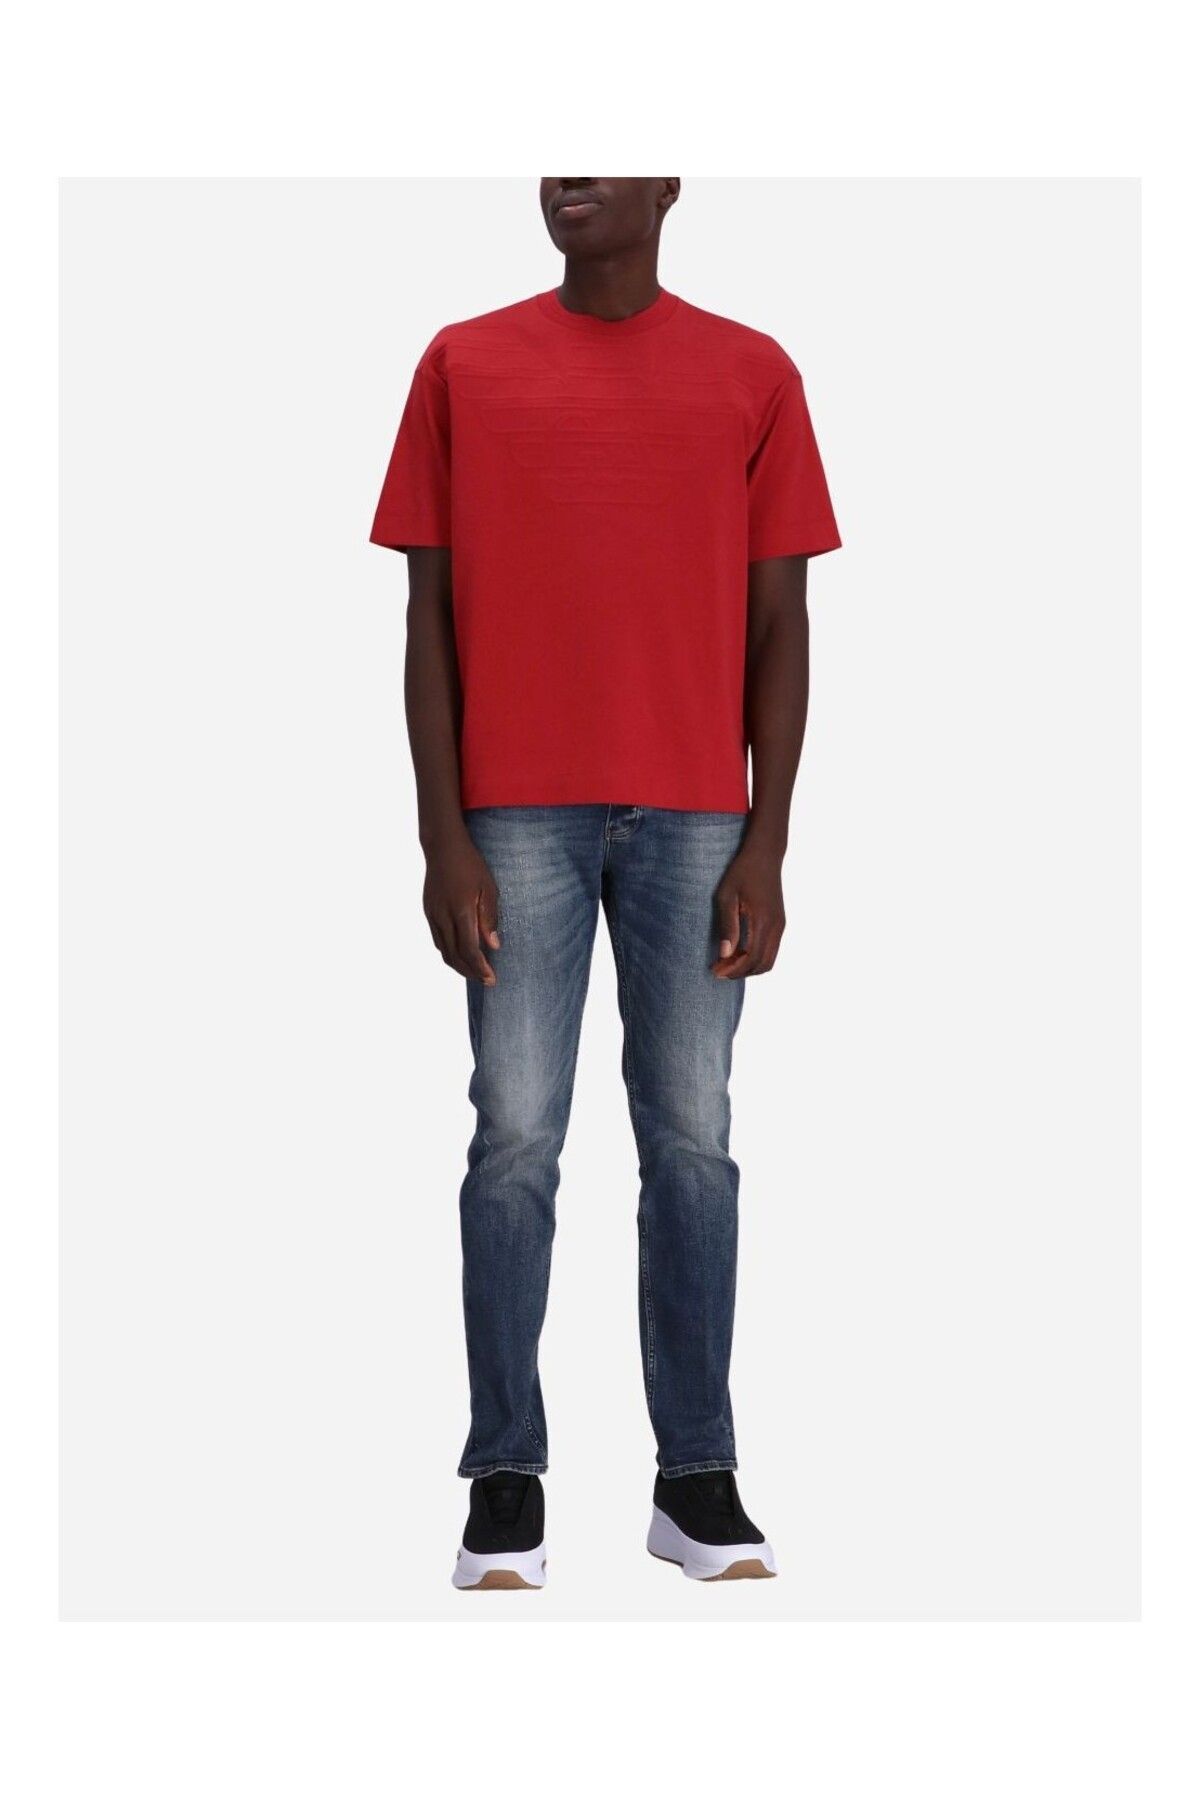 Emporio Armani Erkek Marka Logolu Pamuklu Normal Kalıp Günlük Kırmızı T-Shirt 3D1T94 1JWZZ-0363